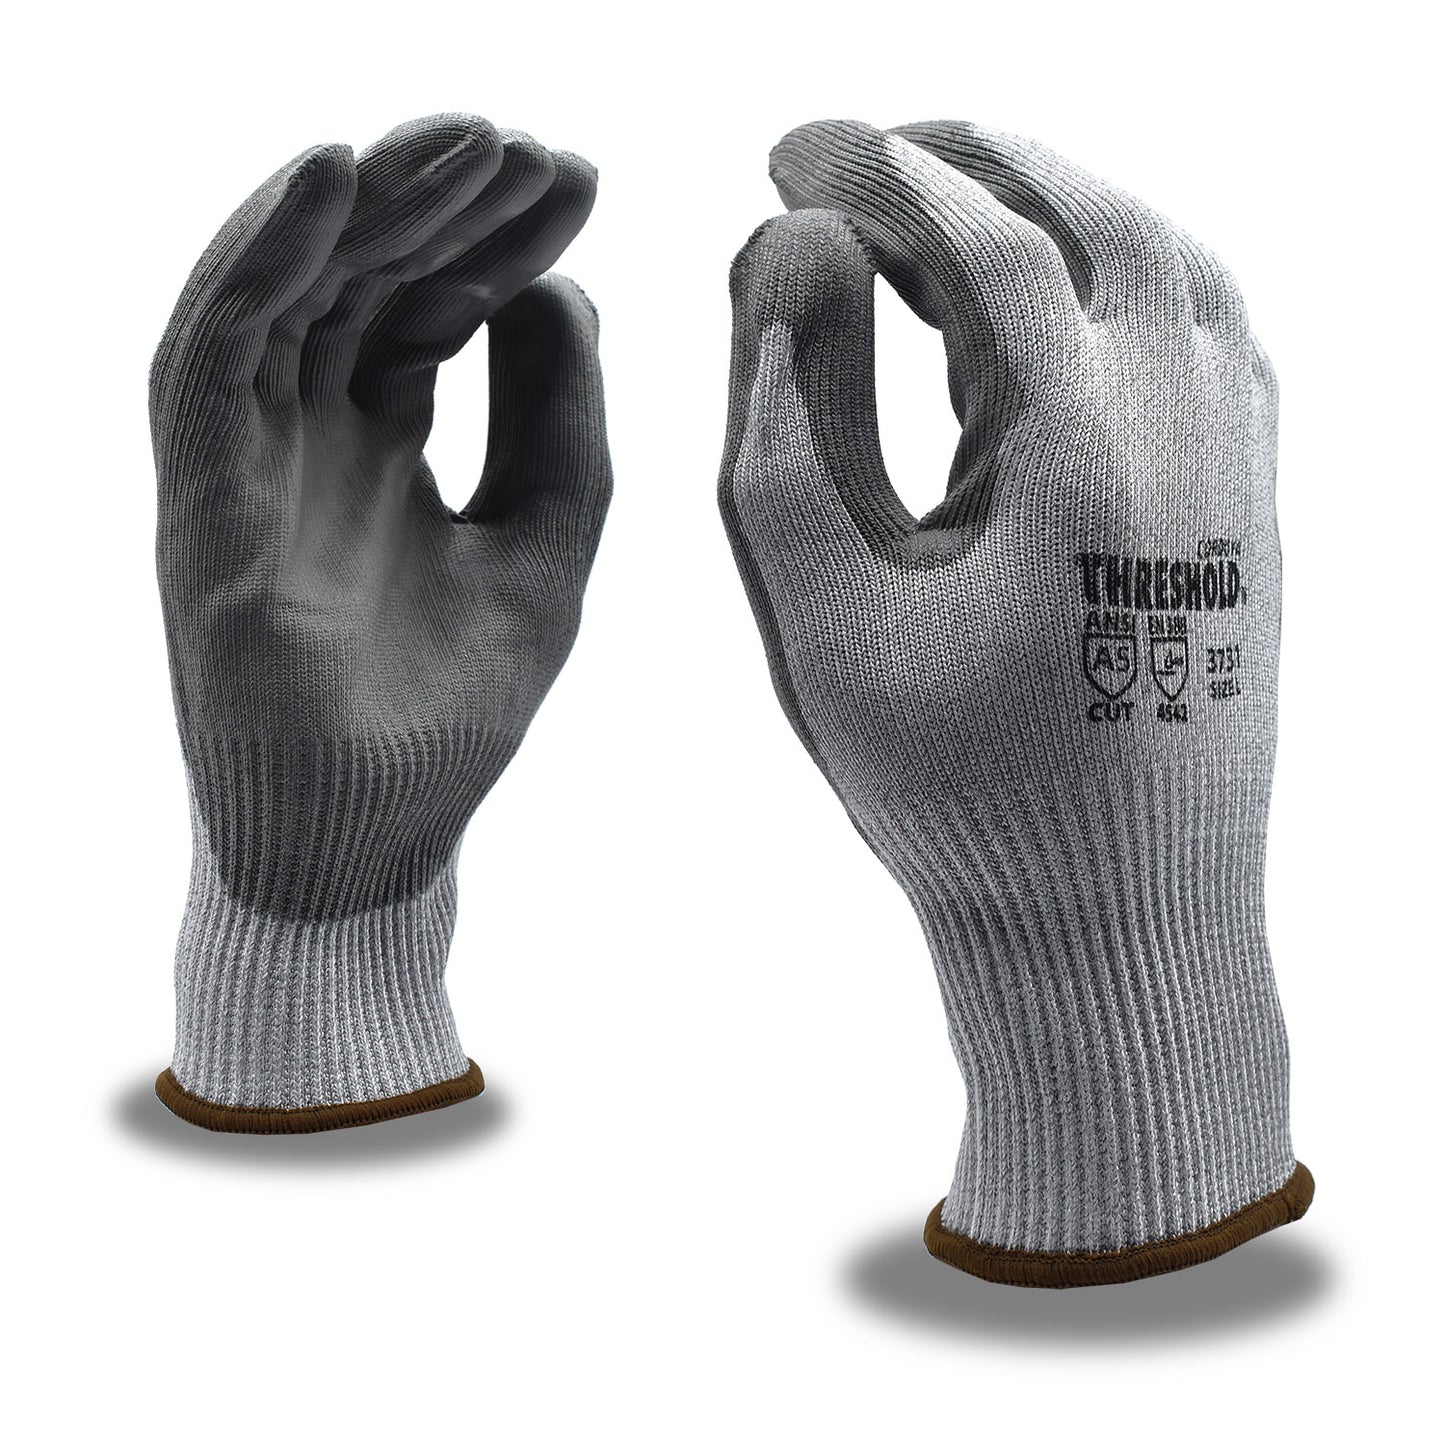 Cut-Resistant Gloves, ANSI Cut Level A5